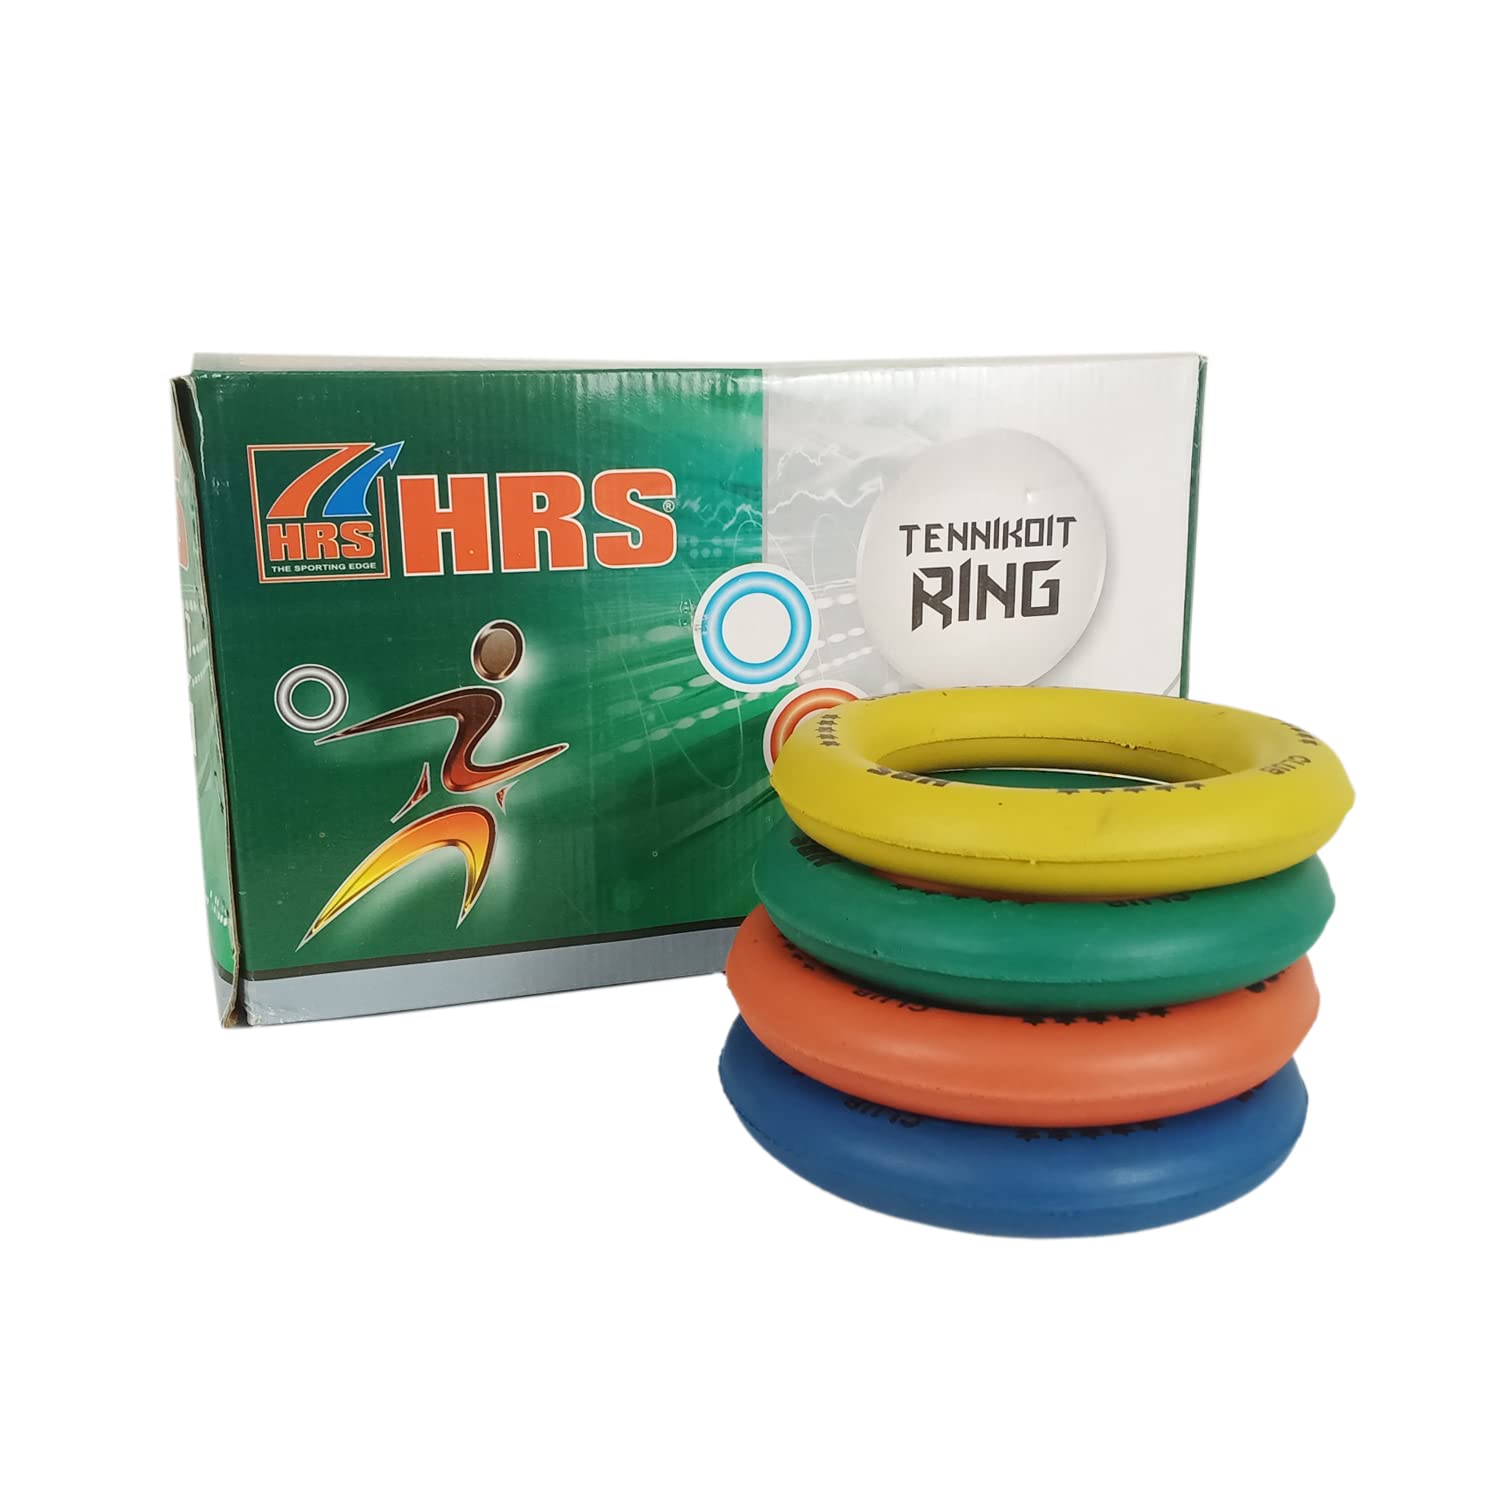 HRS TKR-104 Club Tennikoit Ring, Pack of 12 - Assorted Color - Best Price online Prokicksports.com